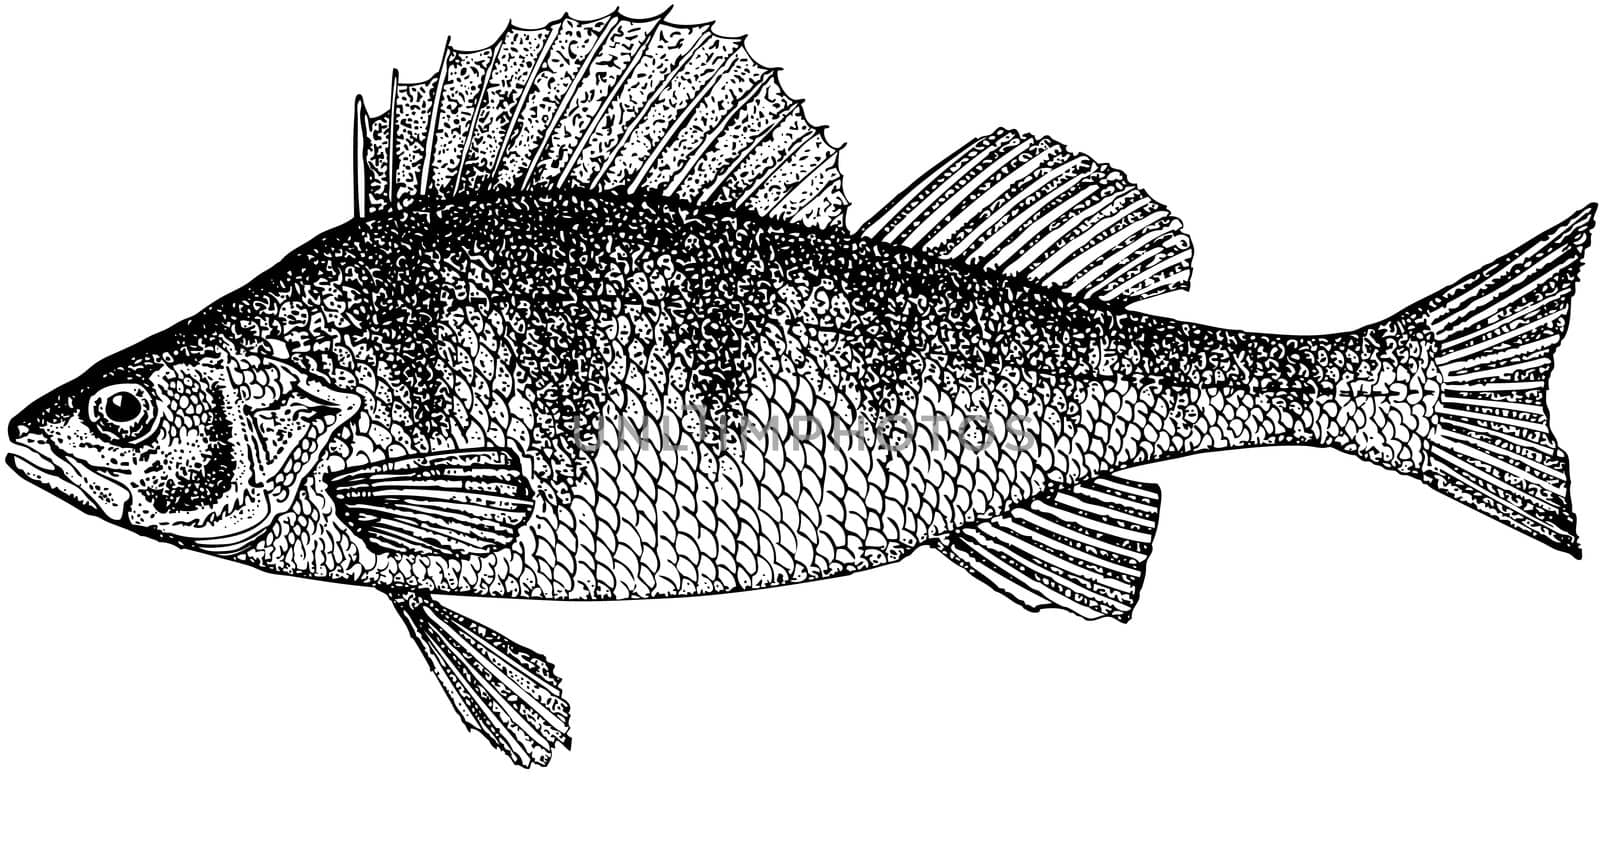 Fish Perch by selhin